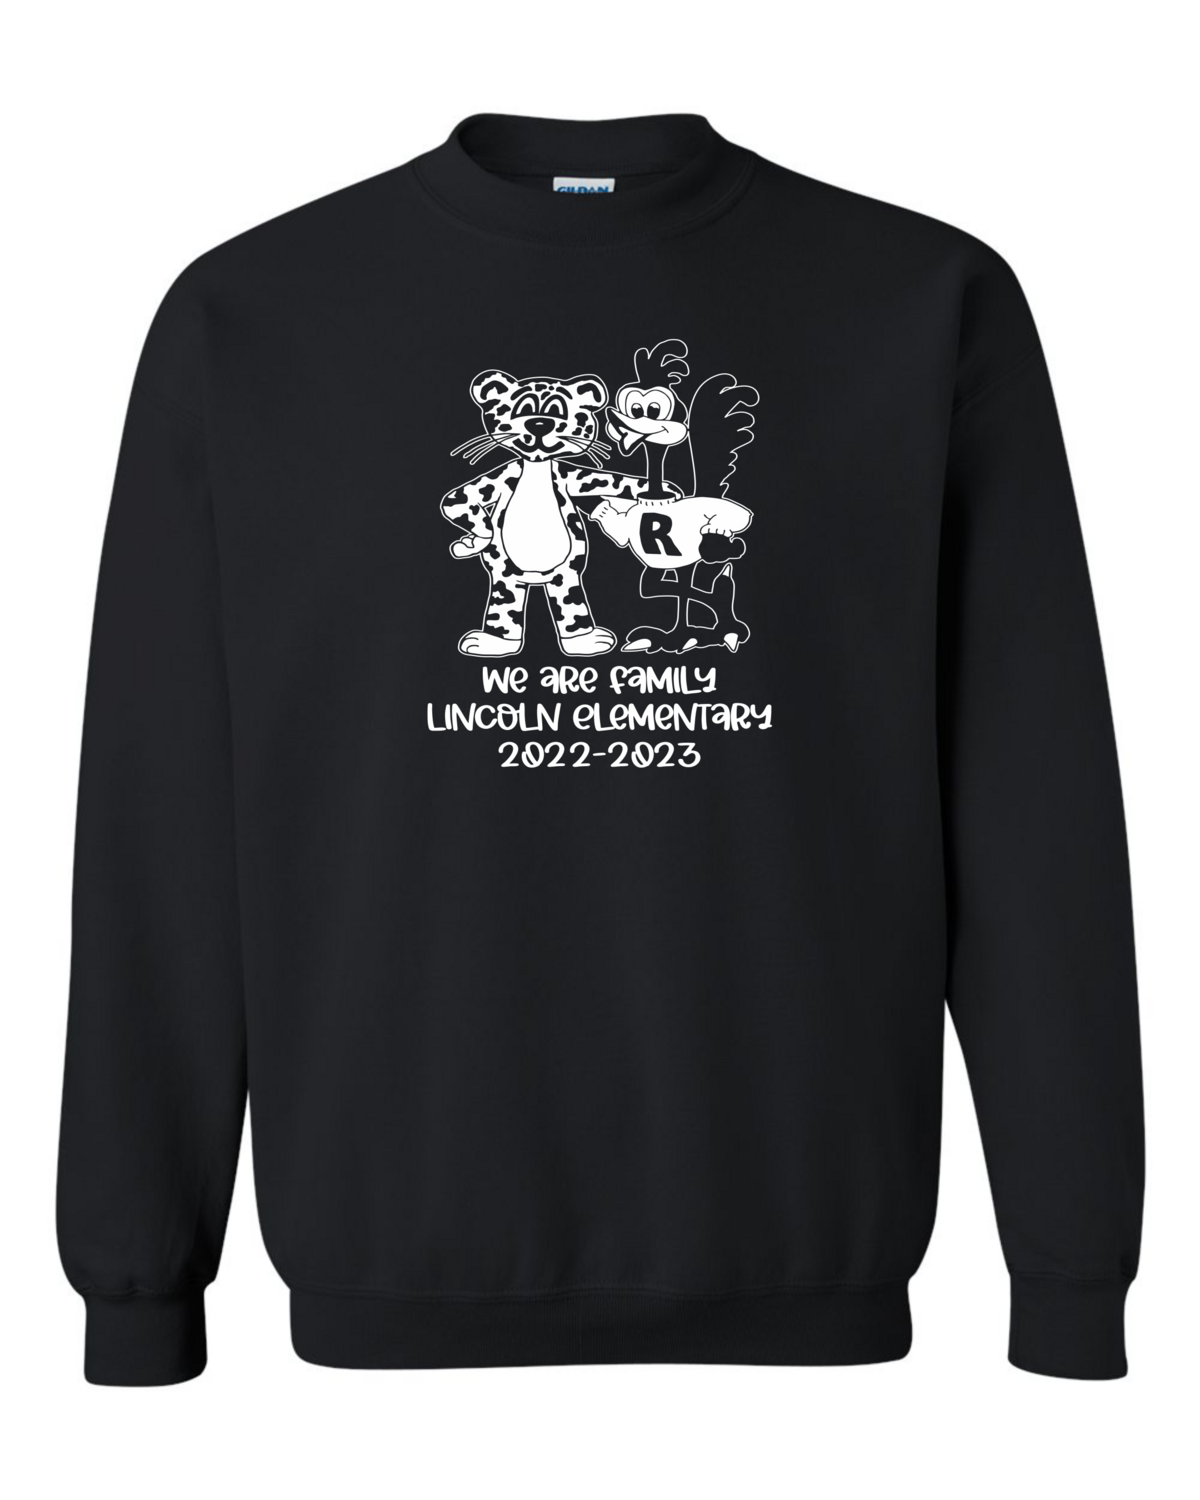 Lincoln Elementary Crewneck Sweatshirt 22-23